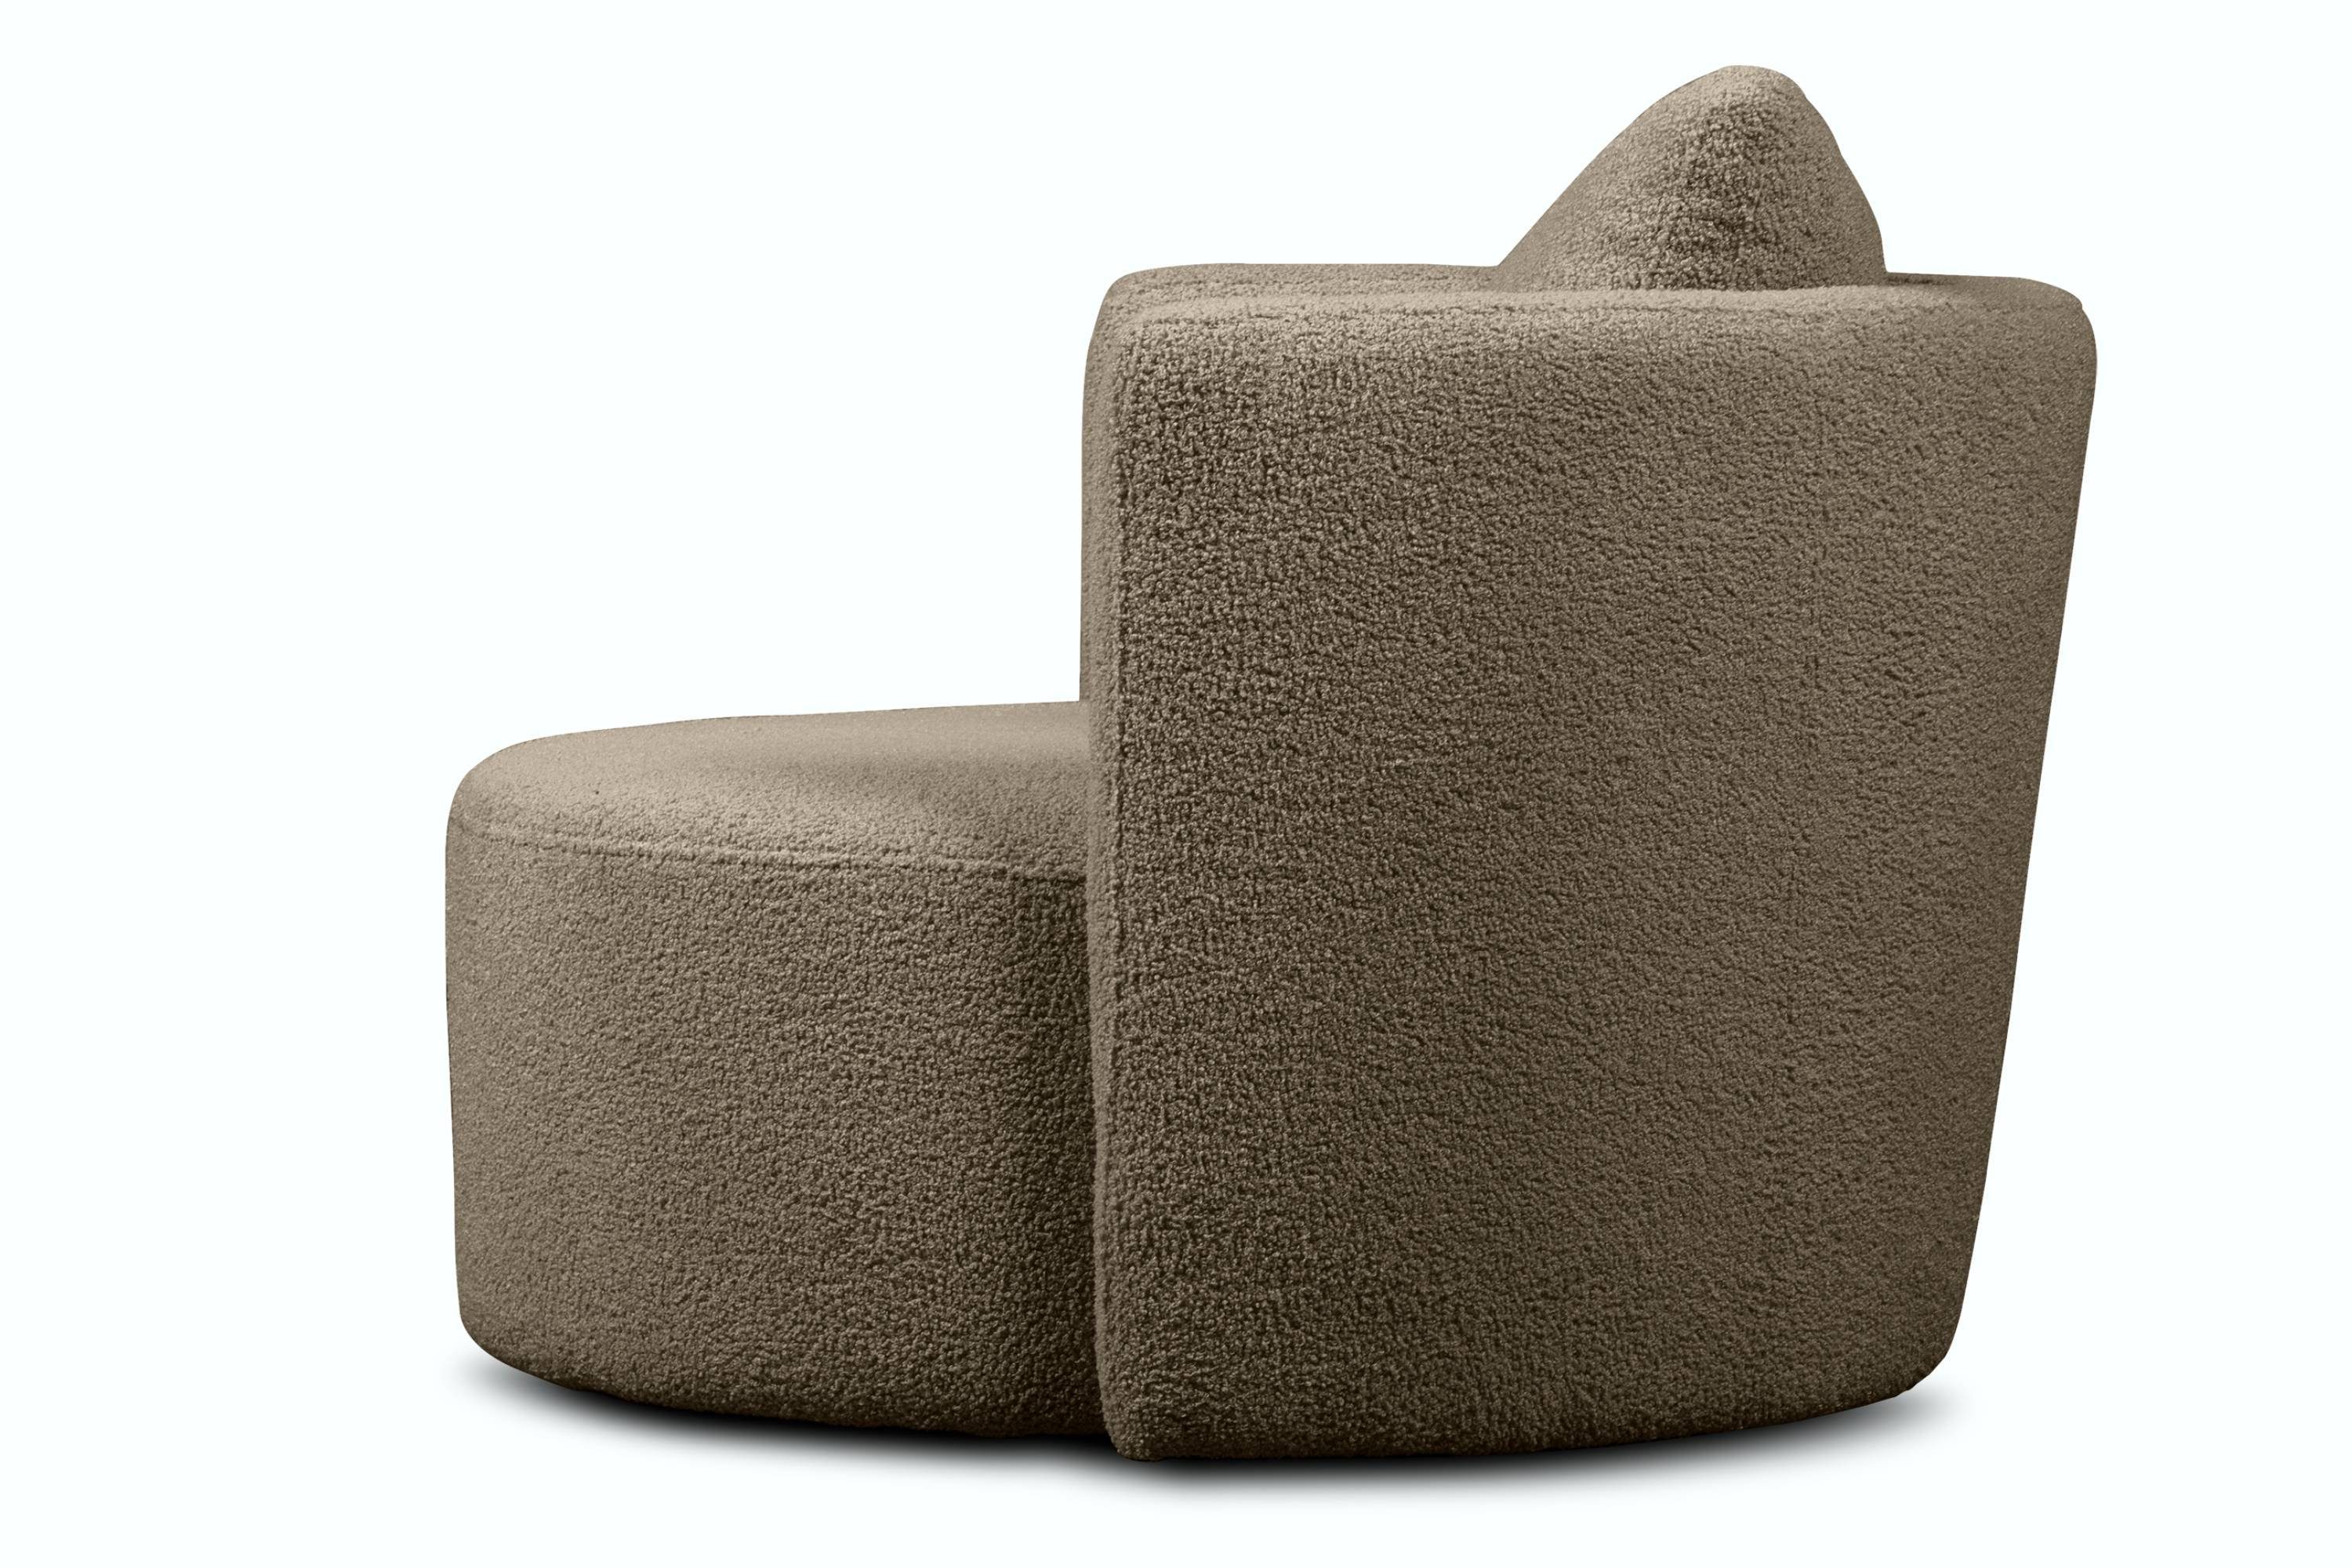 mit Sitzen Bouclé-Stoff, 360° RAGGI Sessel komfortables Konsimo Drehsessel mit Sitzhocker, Drehfunktion,